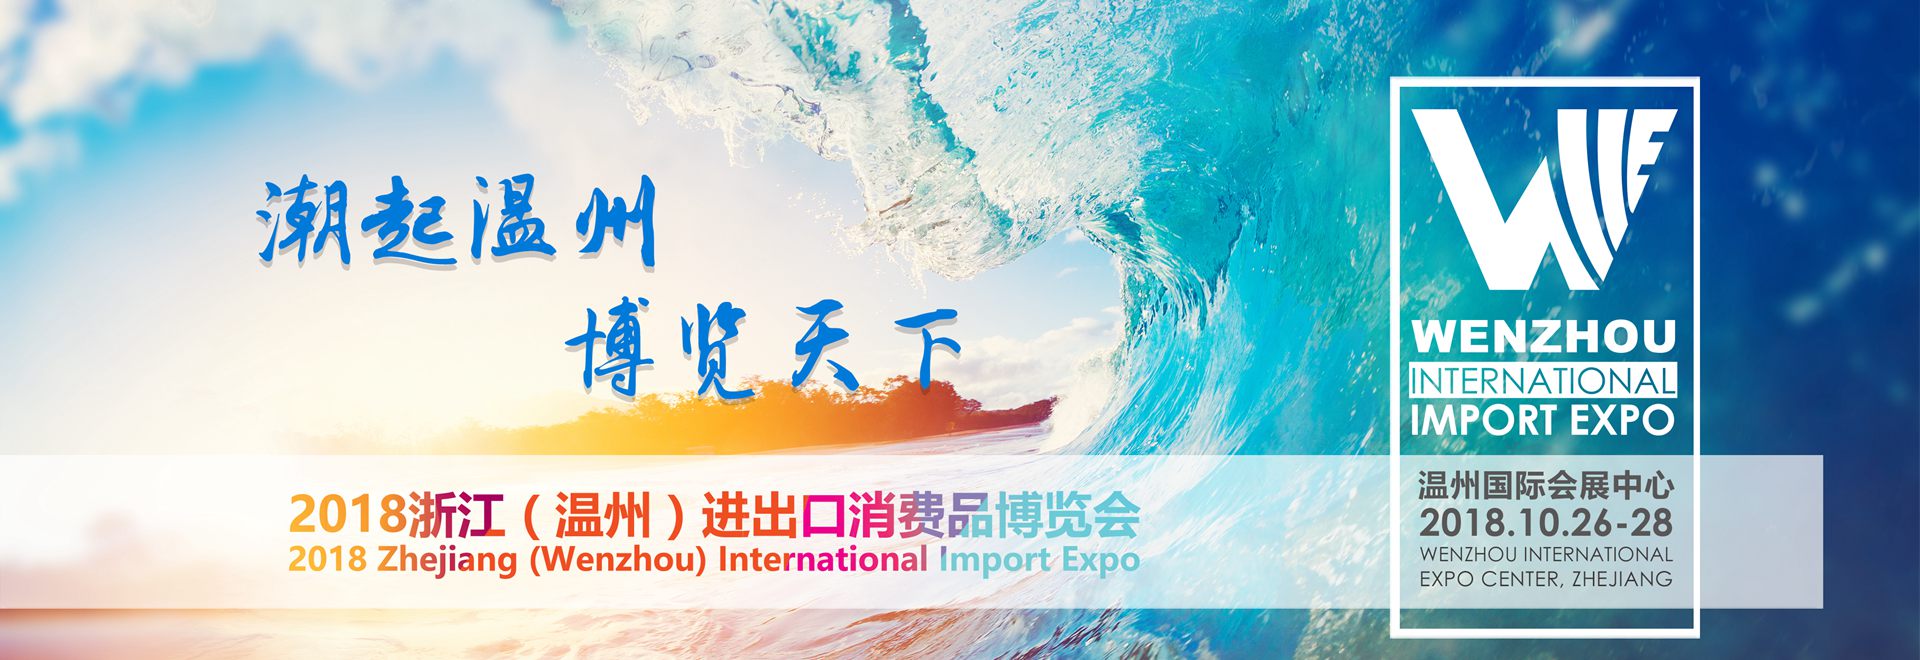 2018 Zhejiang (Wenzhou) International Import Expo (WIIE)